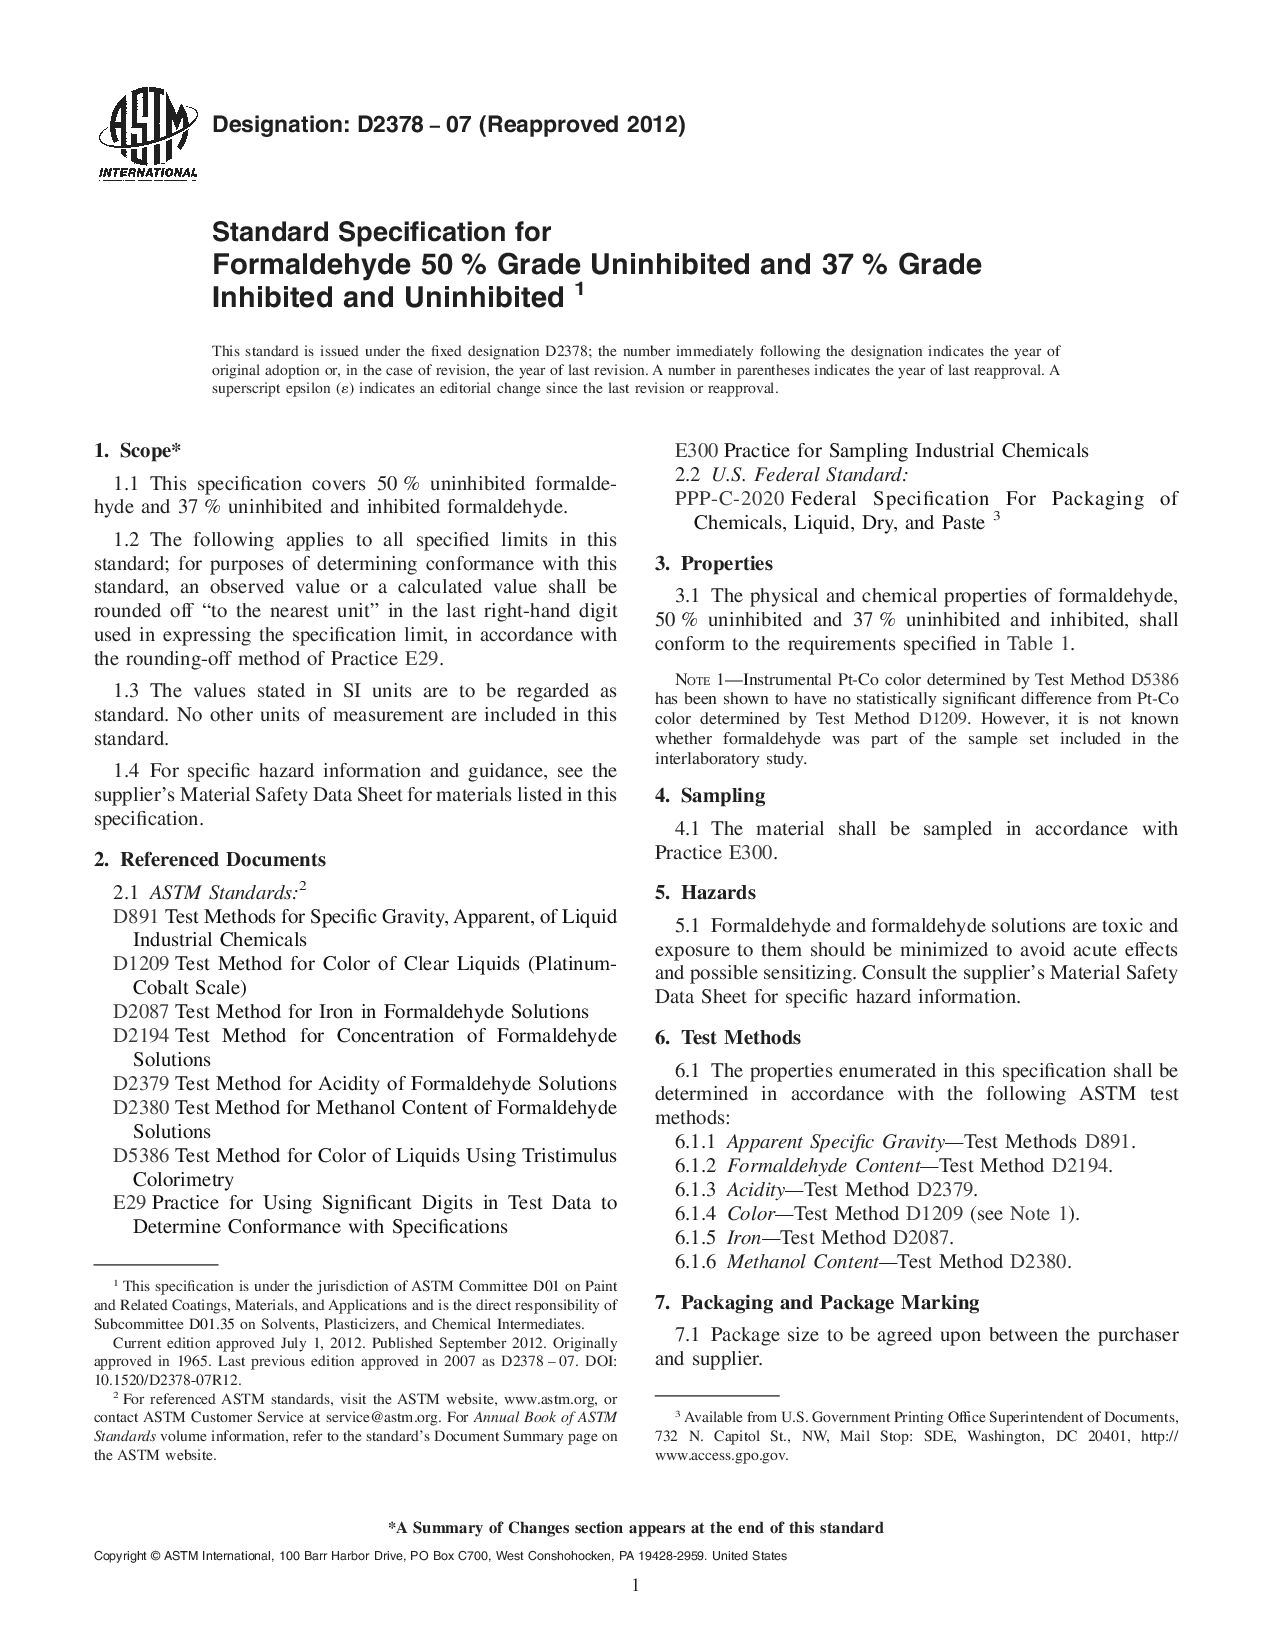 ASTM D2378-07(2012)封面图